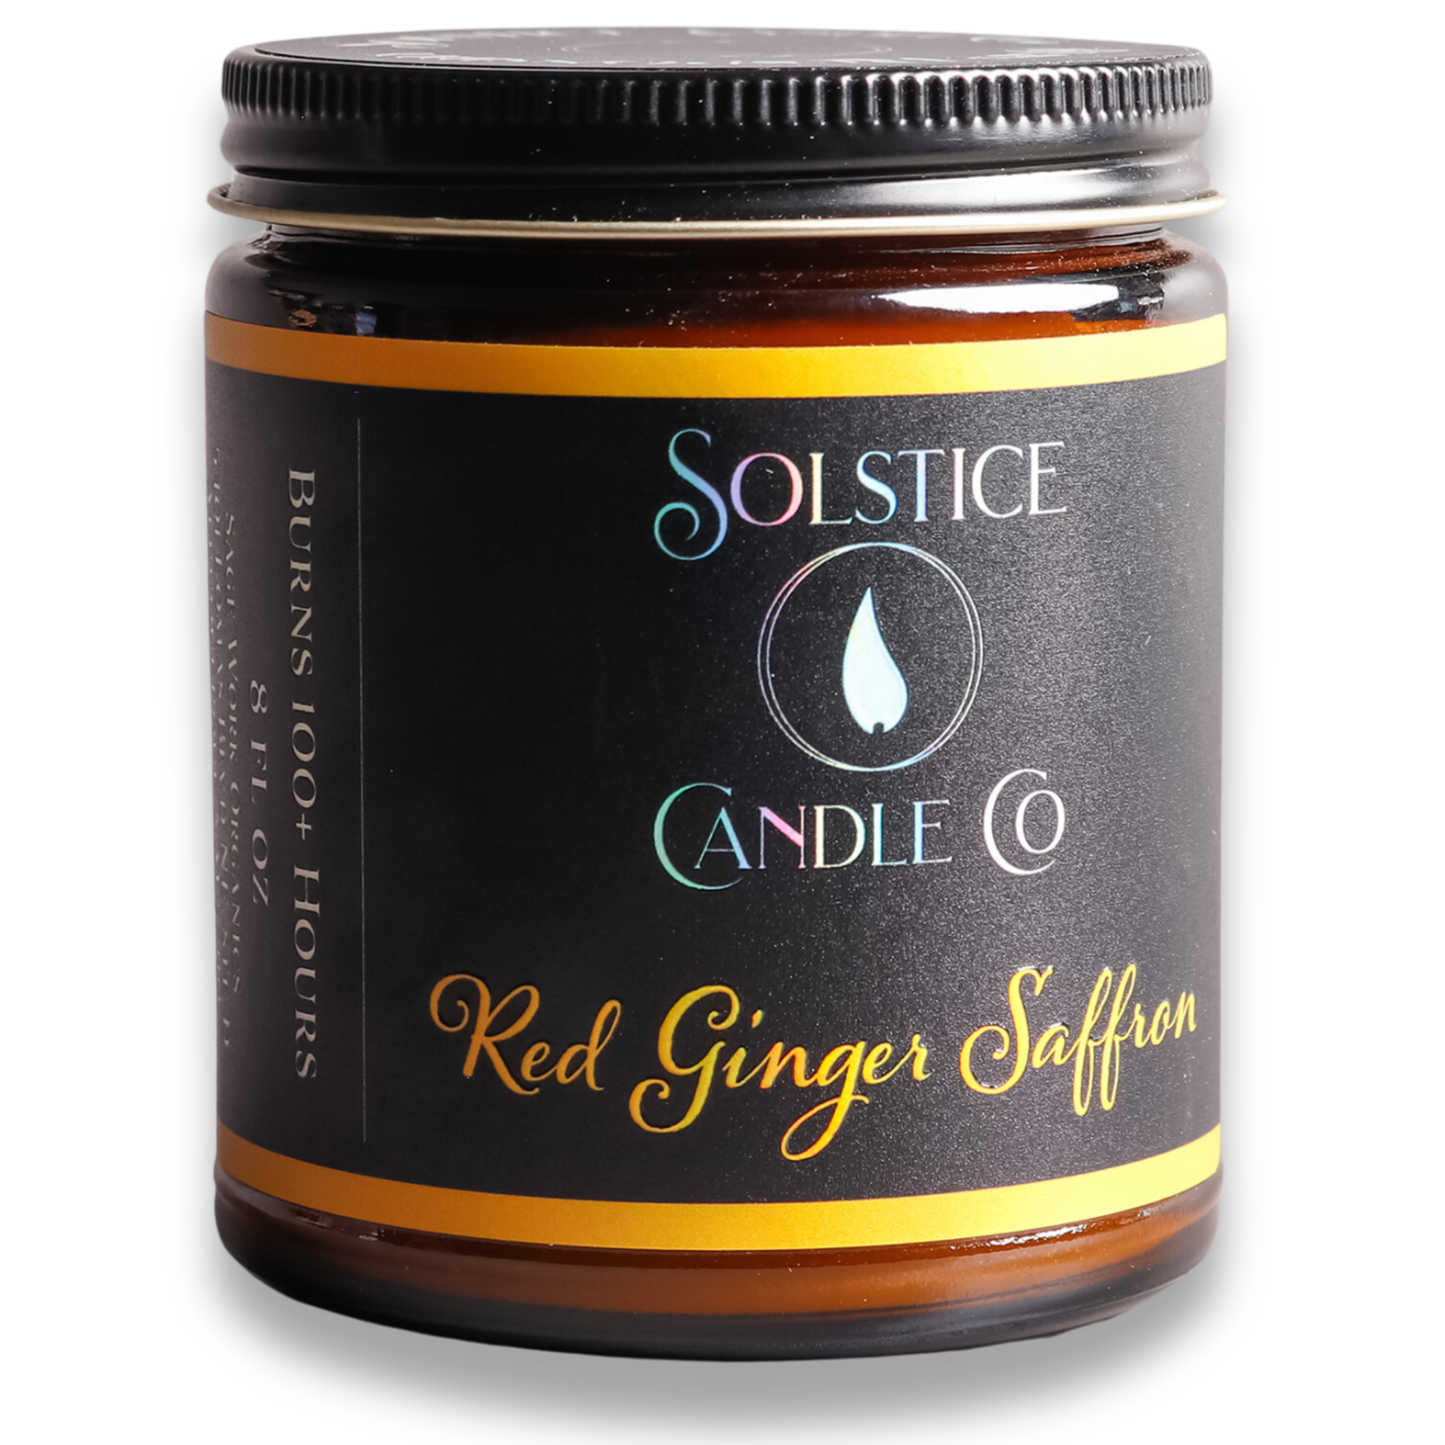 Red Ginger Saffron Candle